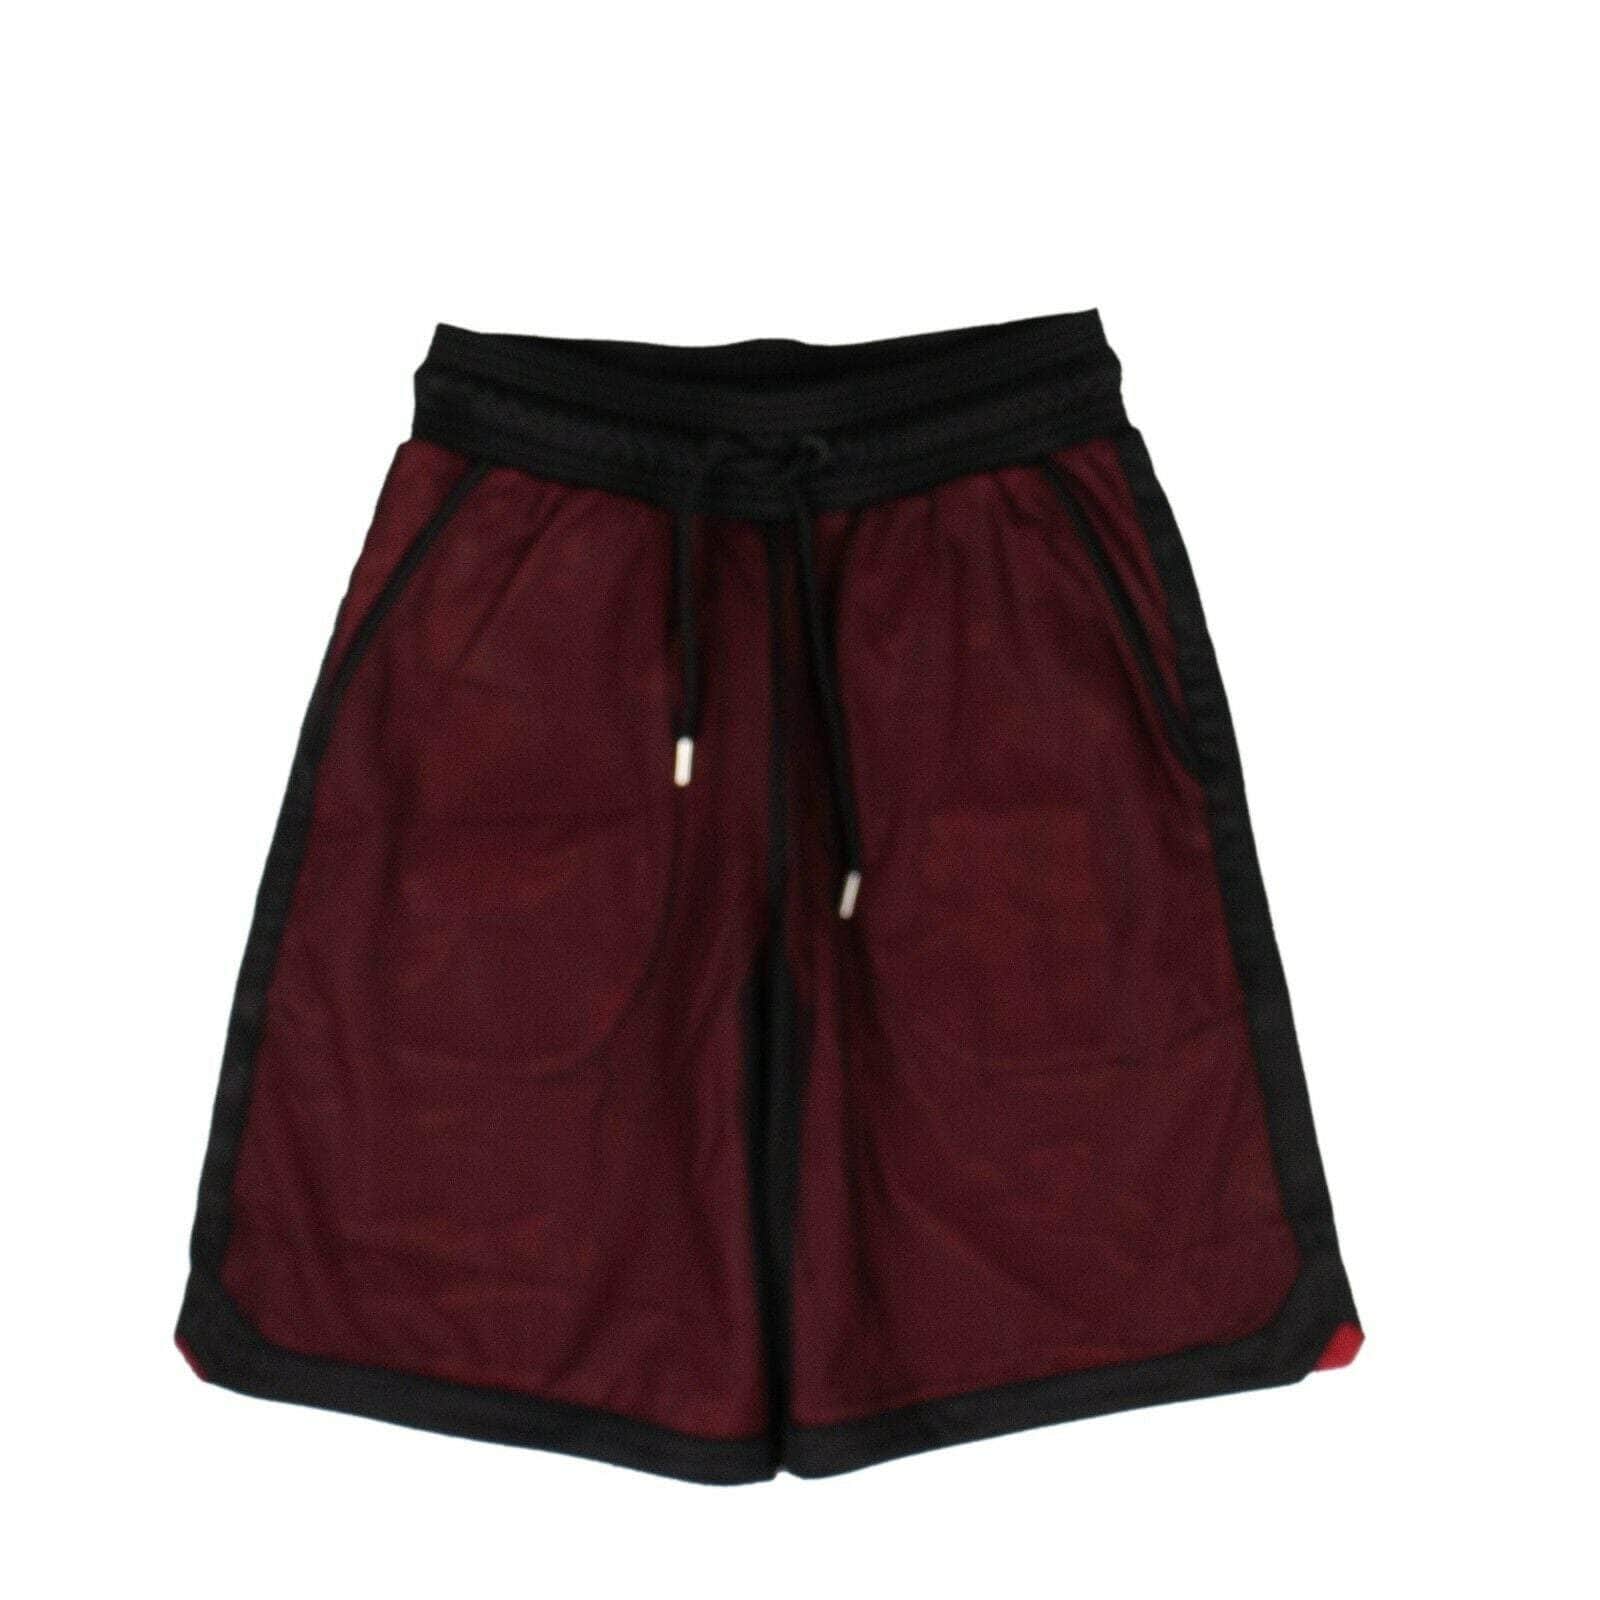 Marcelo Burlon Men's Shorts XXS Cotton County Mesh Sweat Shorts - Red 74NGG-MB-1110/XXS 74NGG-MB-1110/XXS